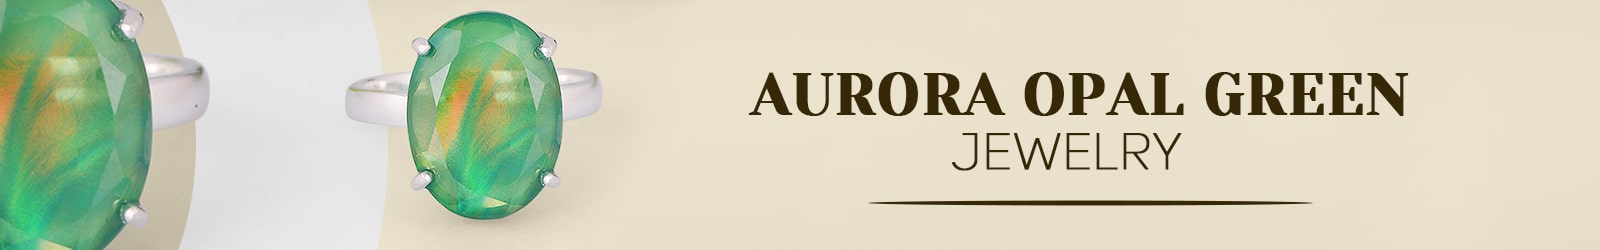 Aurora Opal Green Jewelry Wholesale Supplier